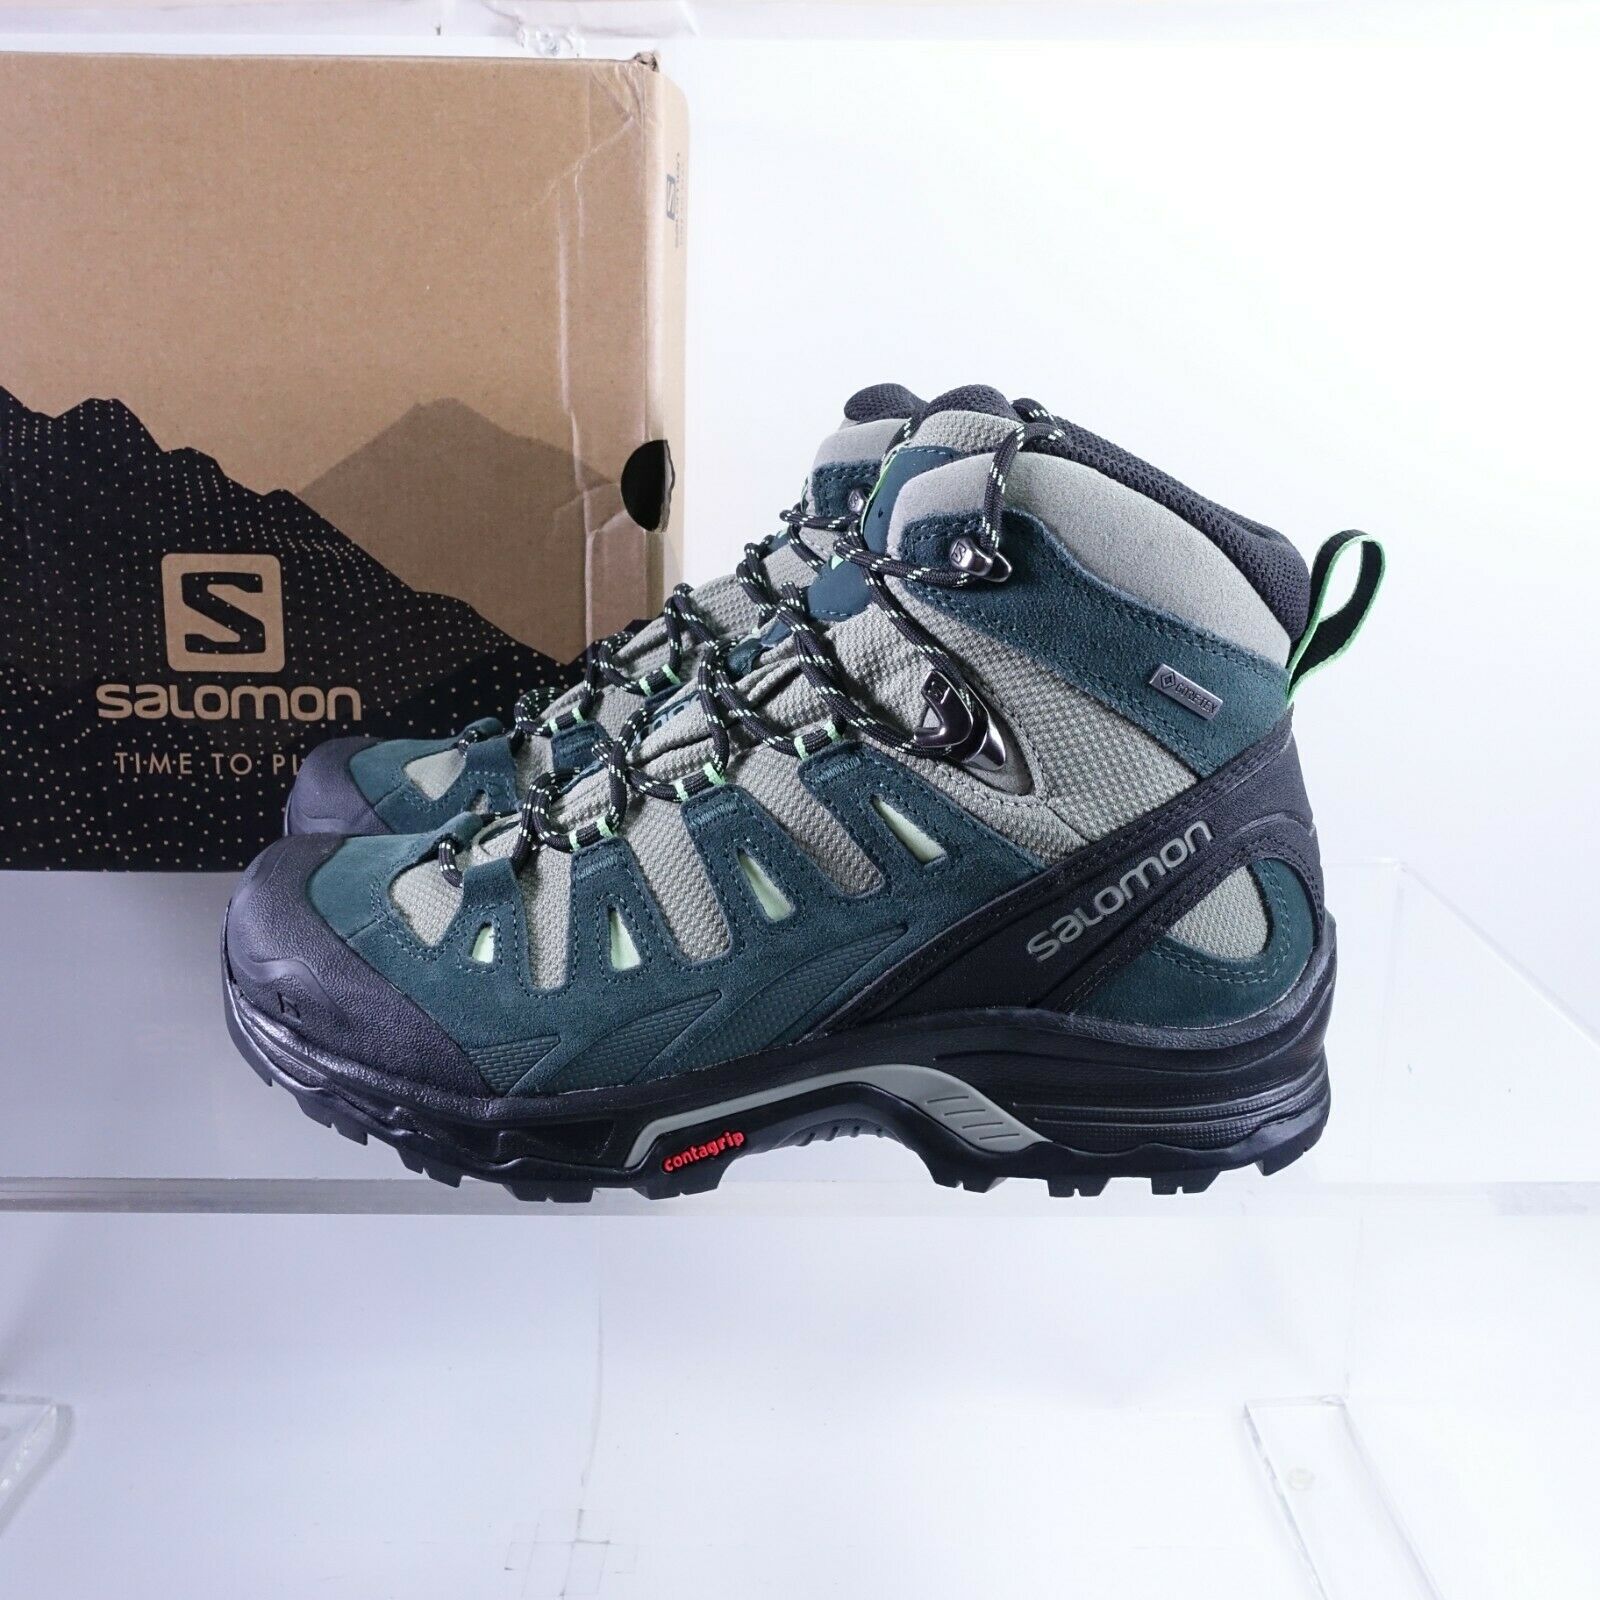 Size 8 Women's Salomon Quest Prime GTX Hiking Shoes 409976-26 Shadow/Green Gable